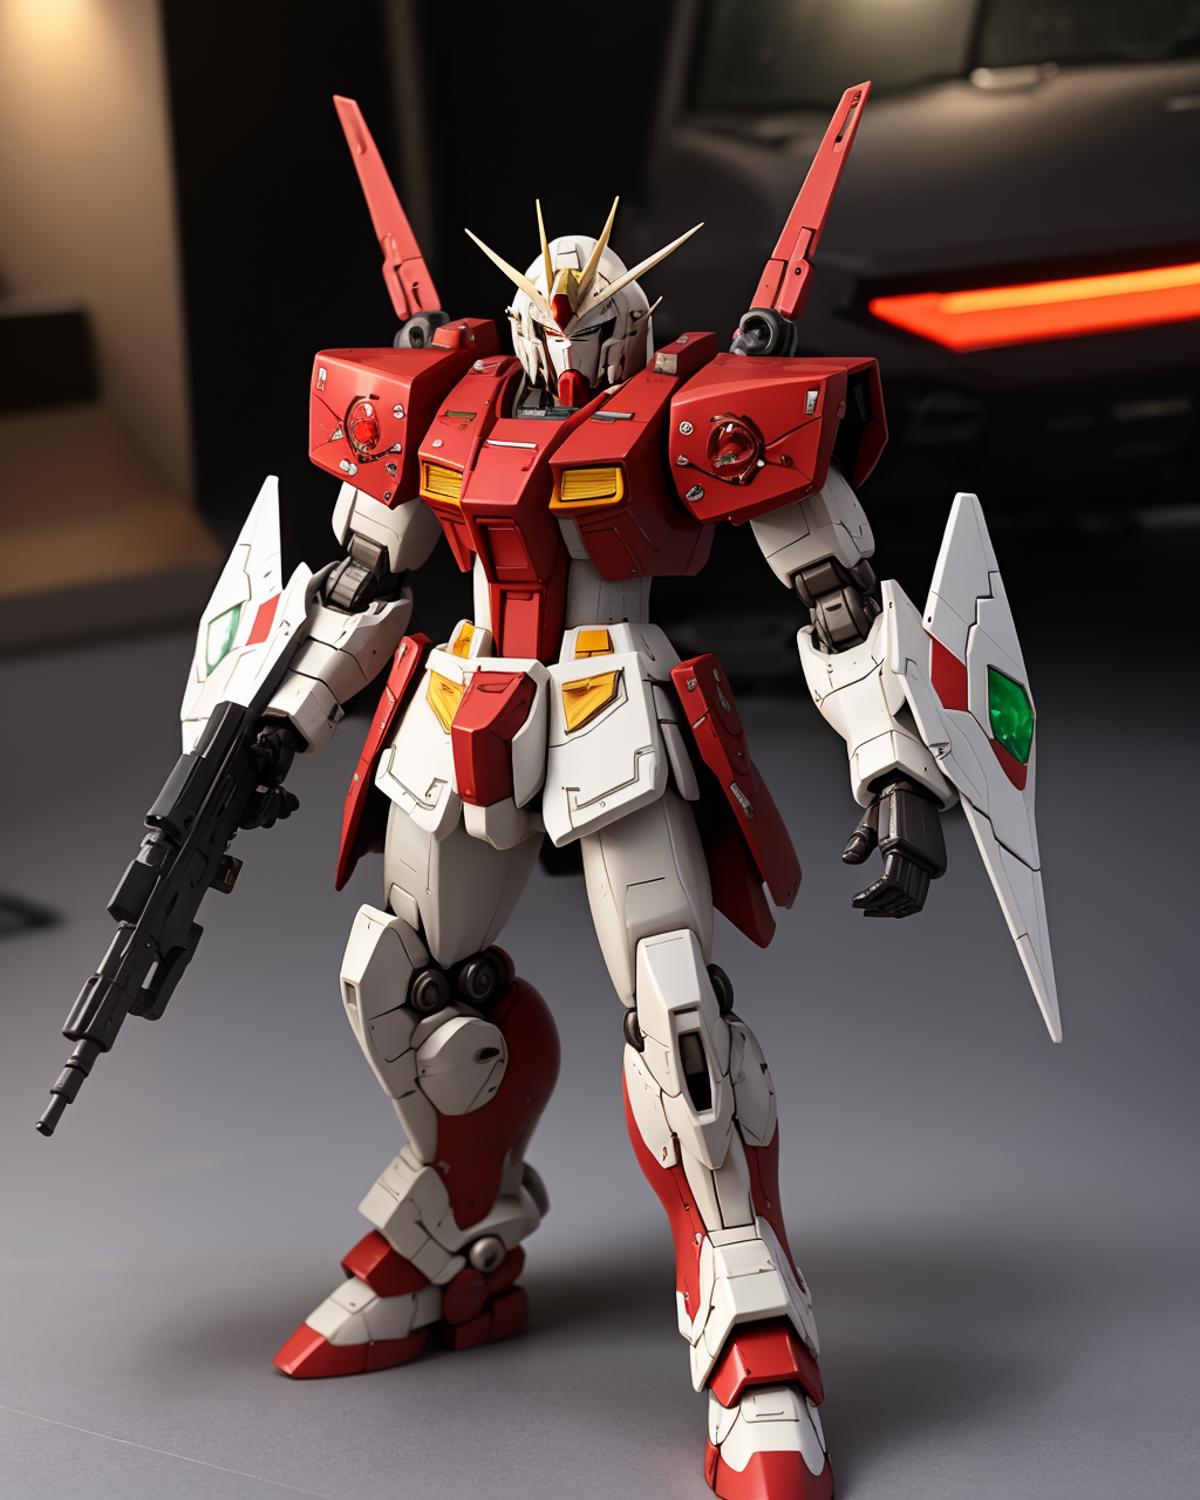 Gundam / Gunpla image by oosayam